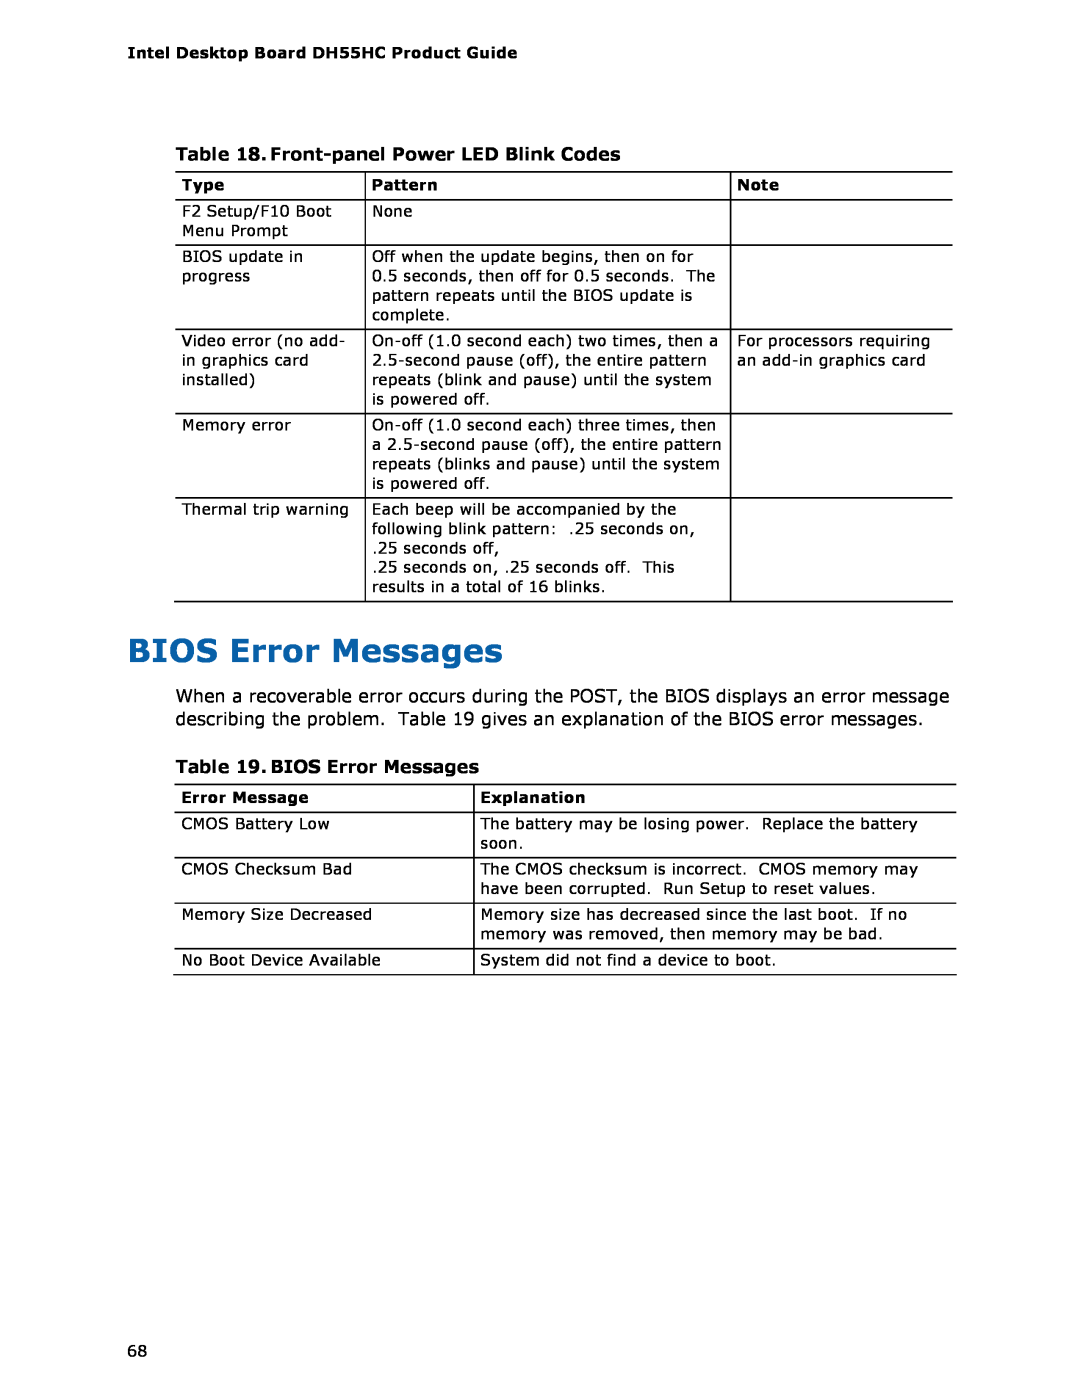 Intel BOXDH55HC manual BIOS Error Messages, Front-panel Power LED Blink Codes 